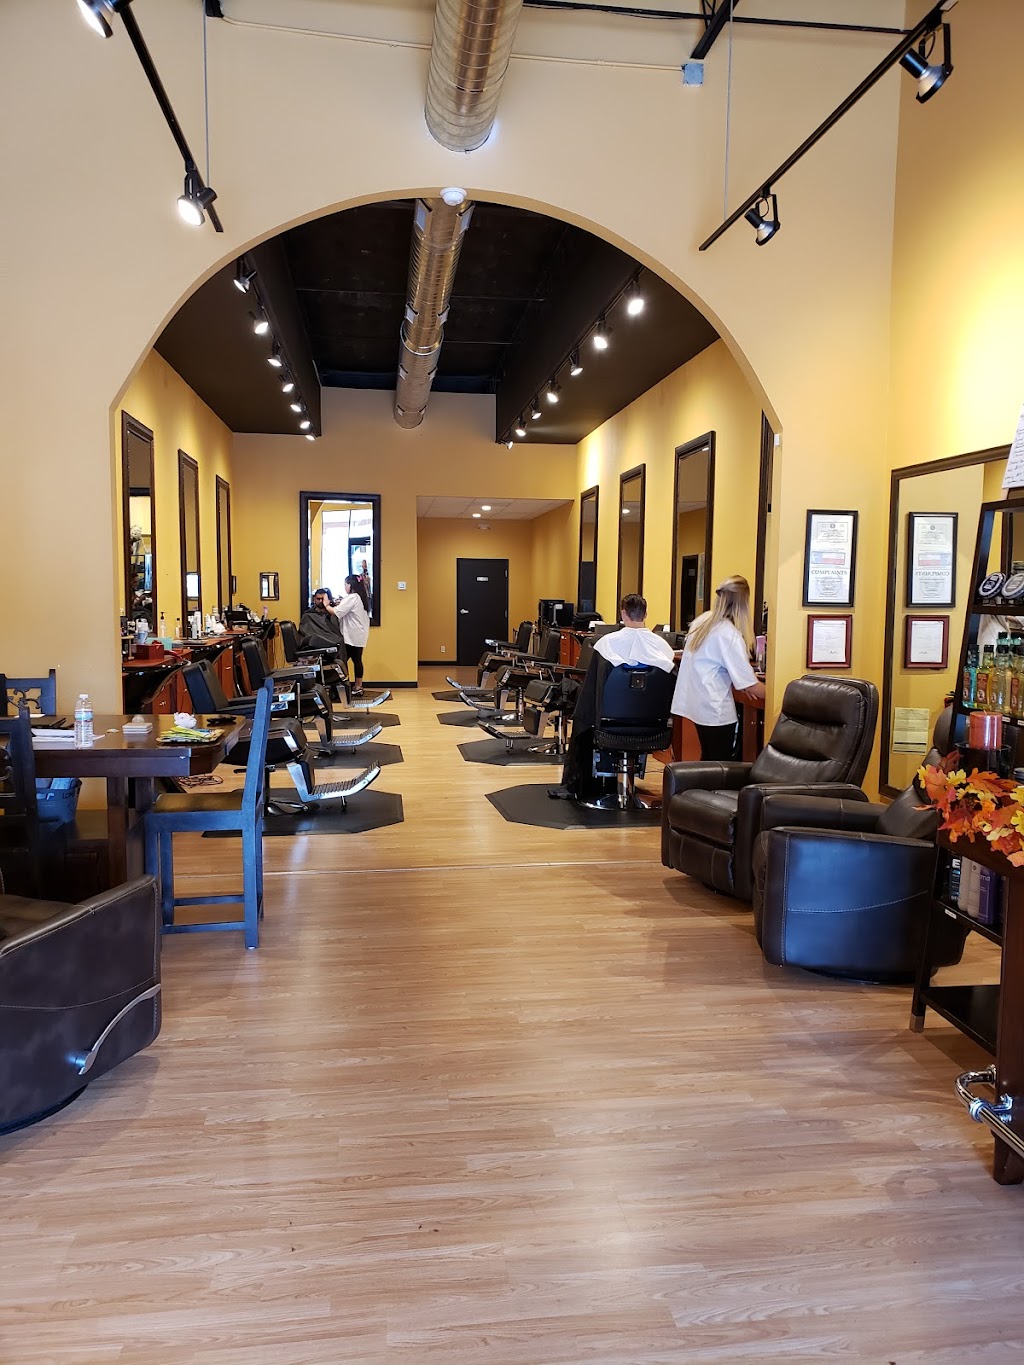 Lombardos Barber Salon | 2701 Custer Pkwy Ste 805, Richardson, TX 75080, USA | Phone: (214) 227-9555